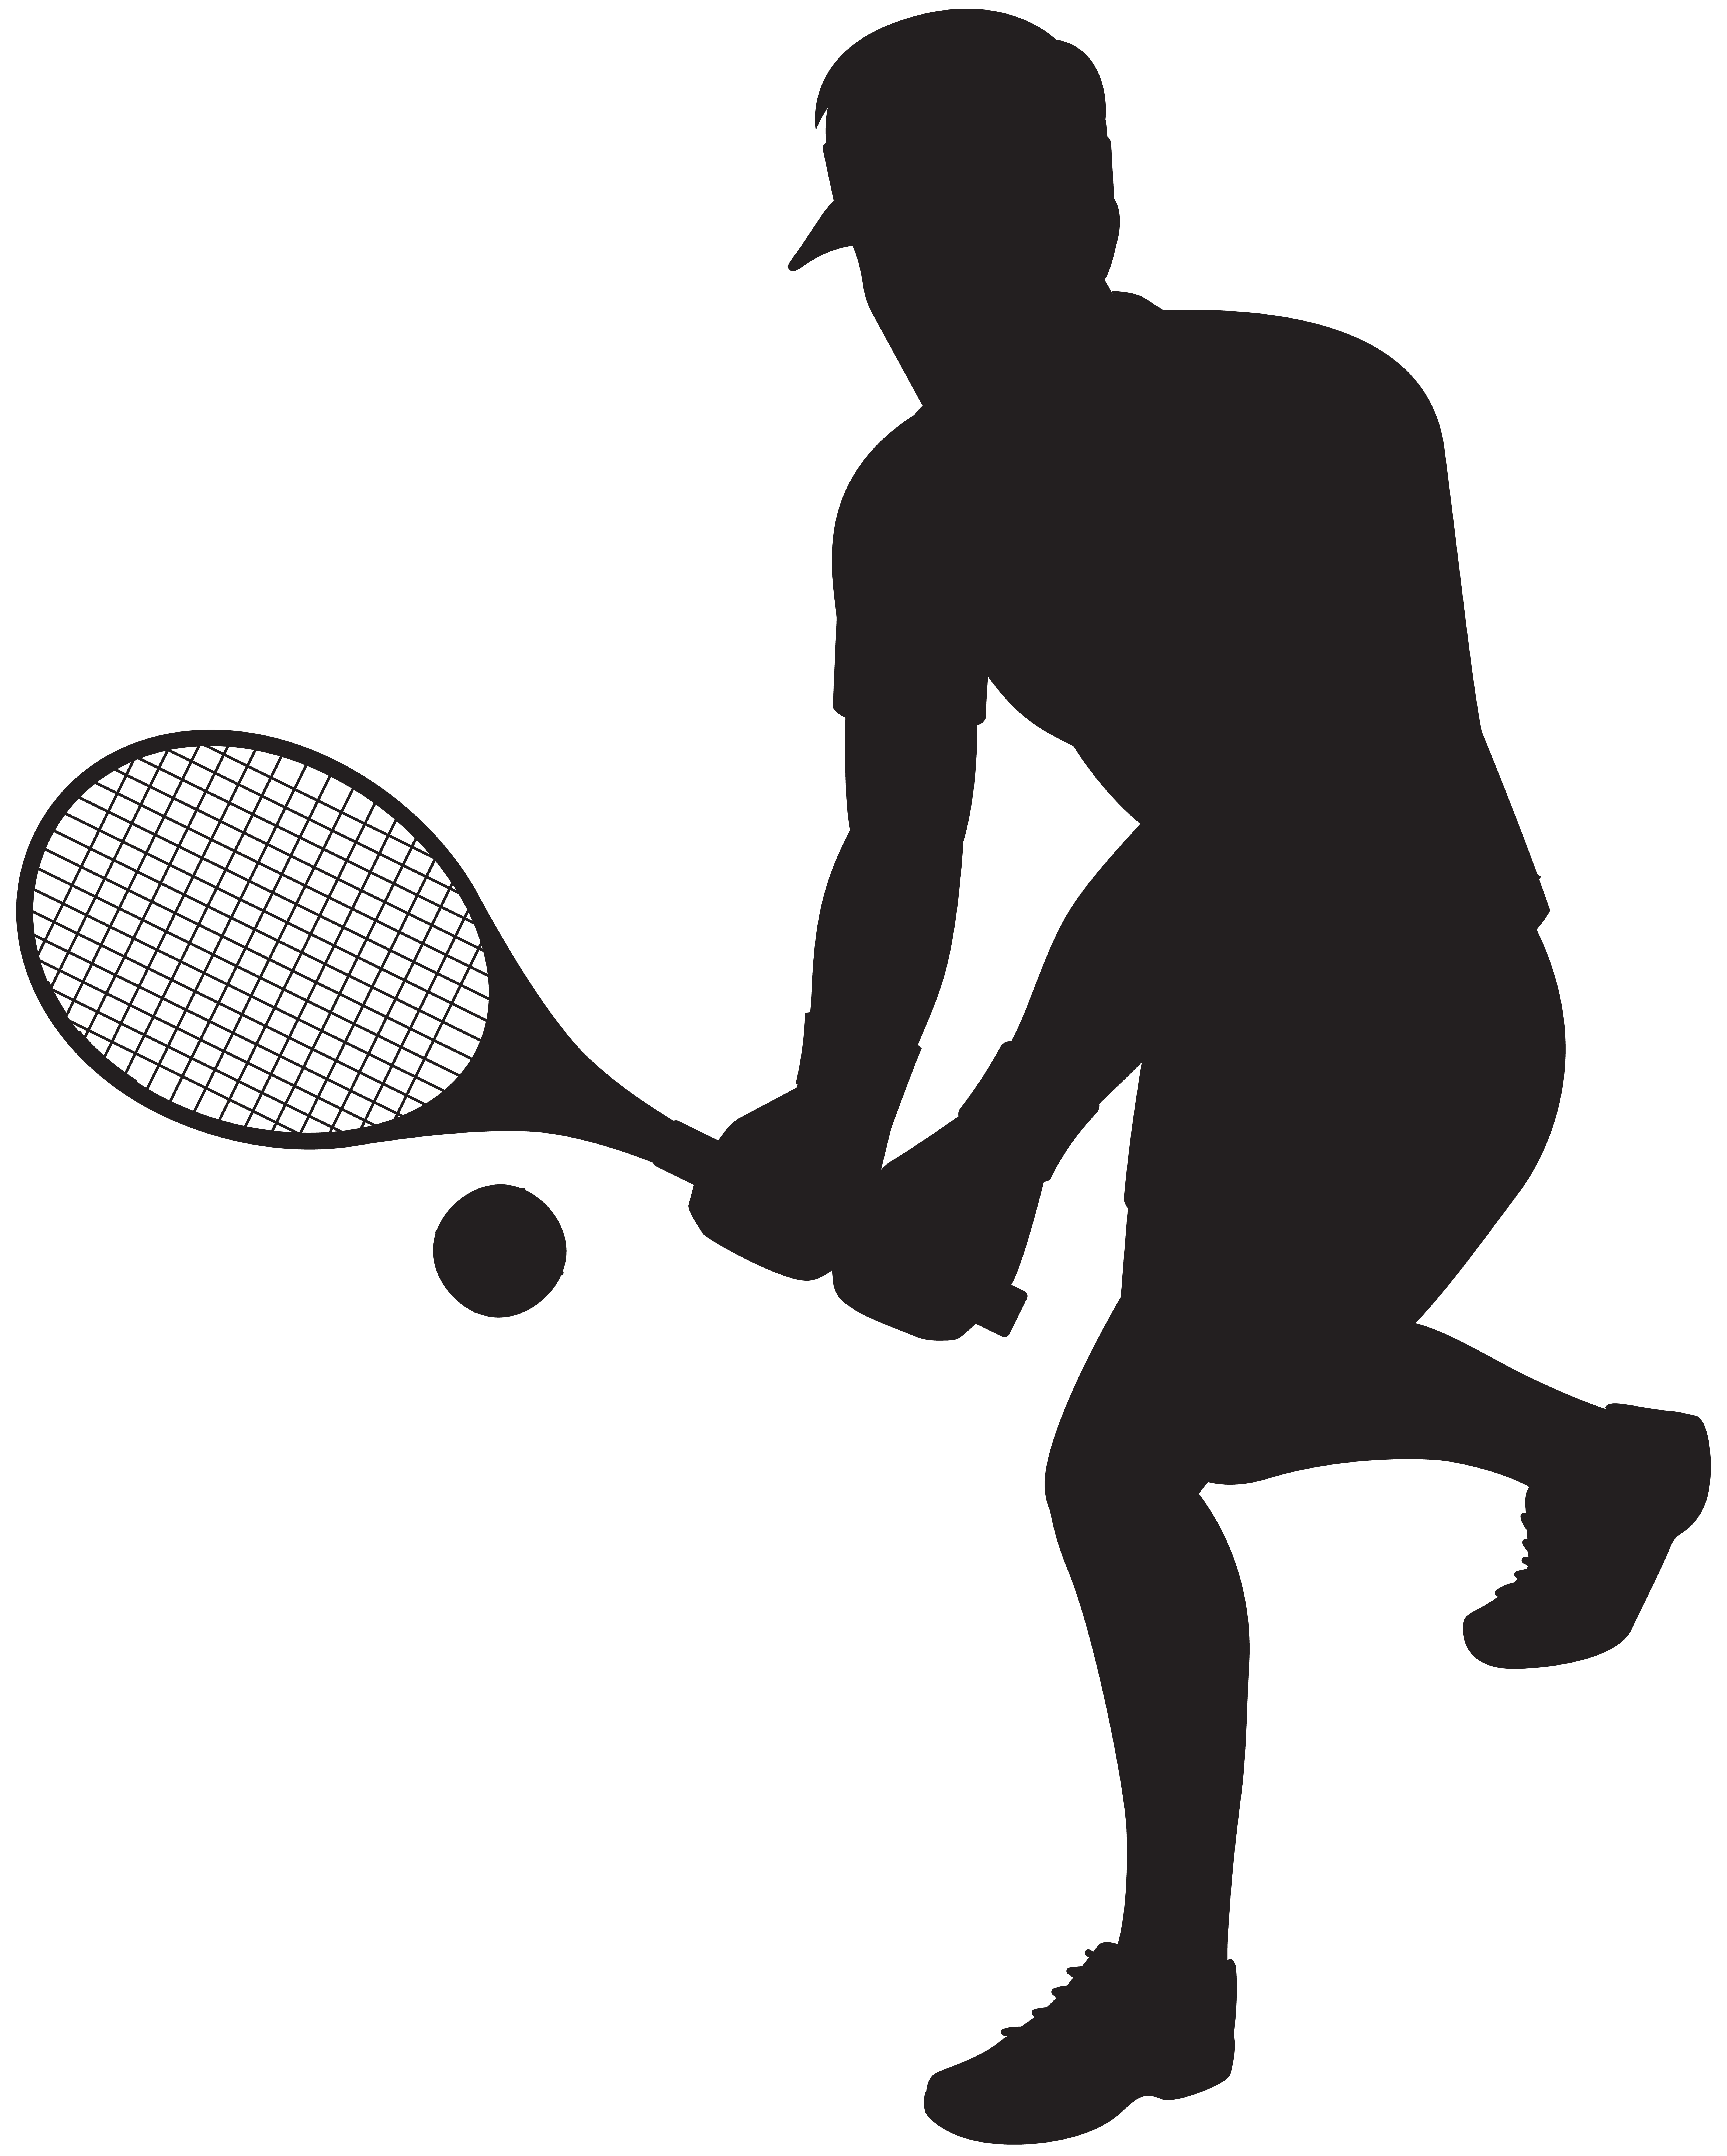 Tennis player silhouette.